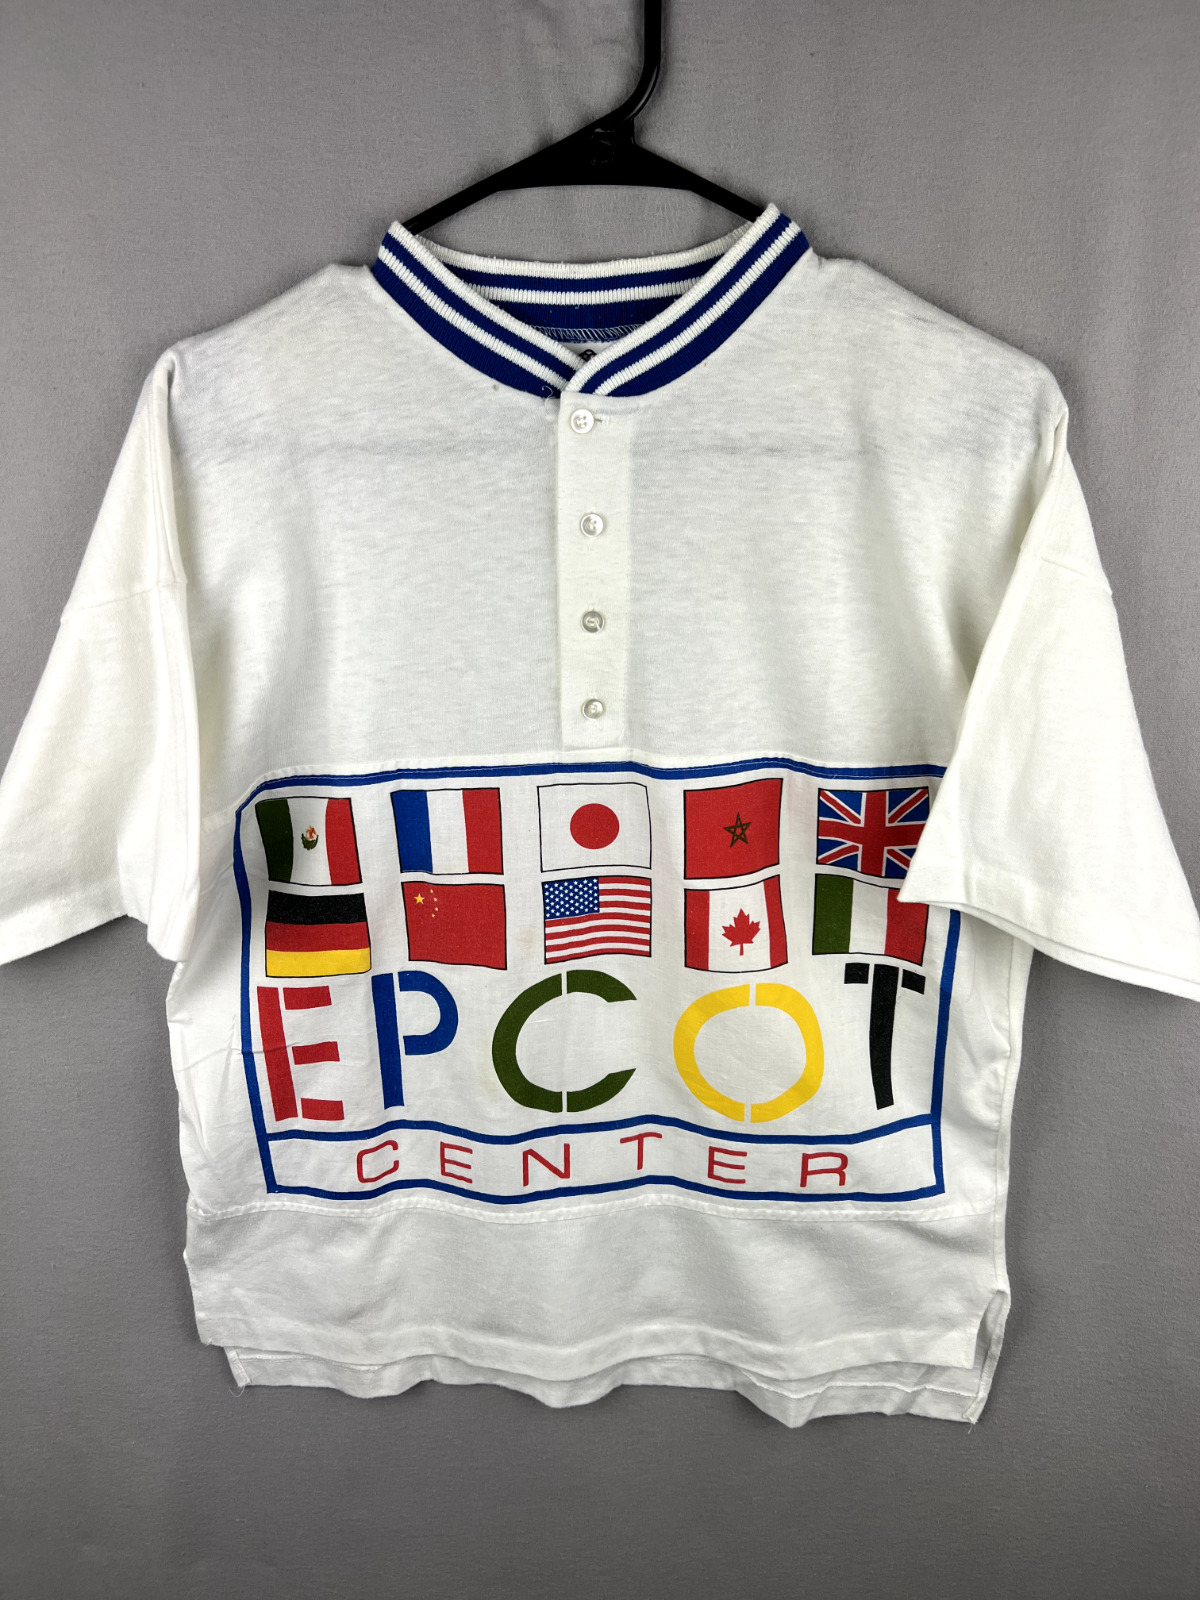 Vintage Epcot Center T-Shirt Adult Small Walt Disney World Flags 1982 USA Henley